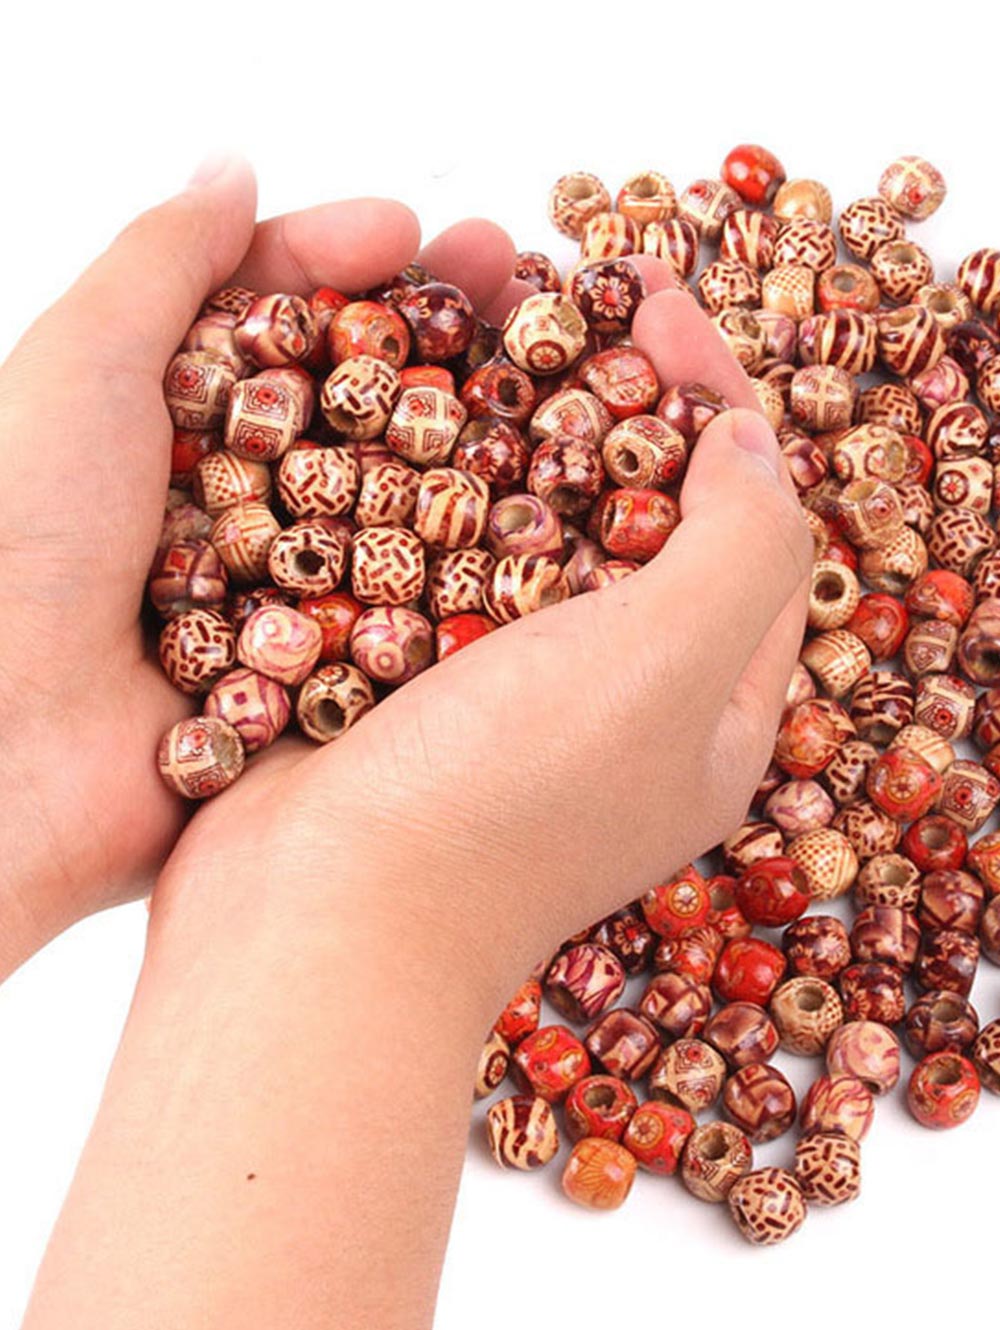 30 pcs wooden beads